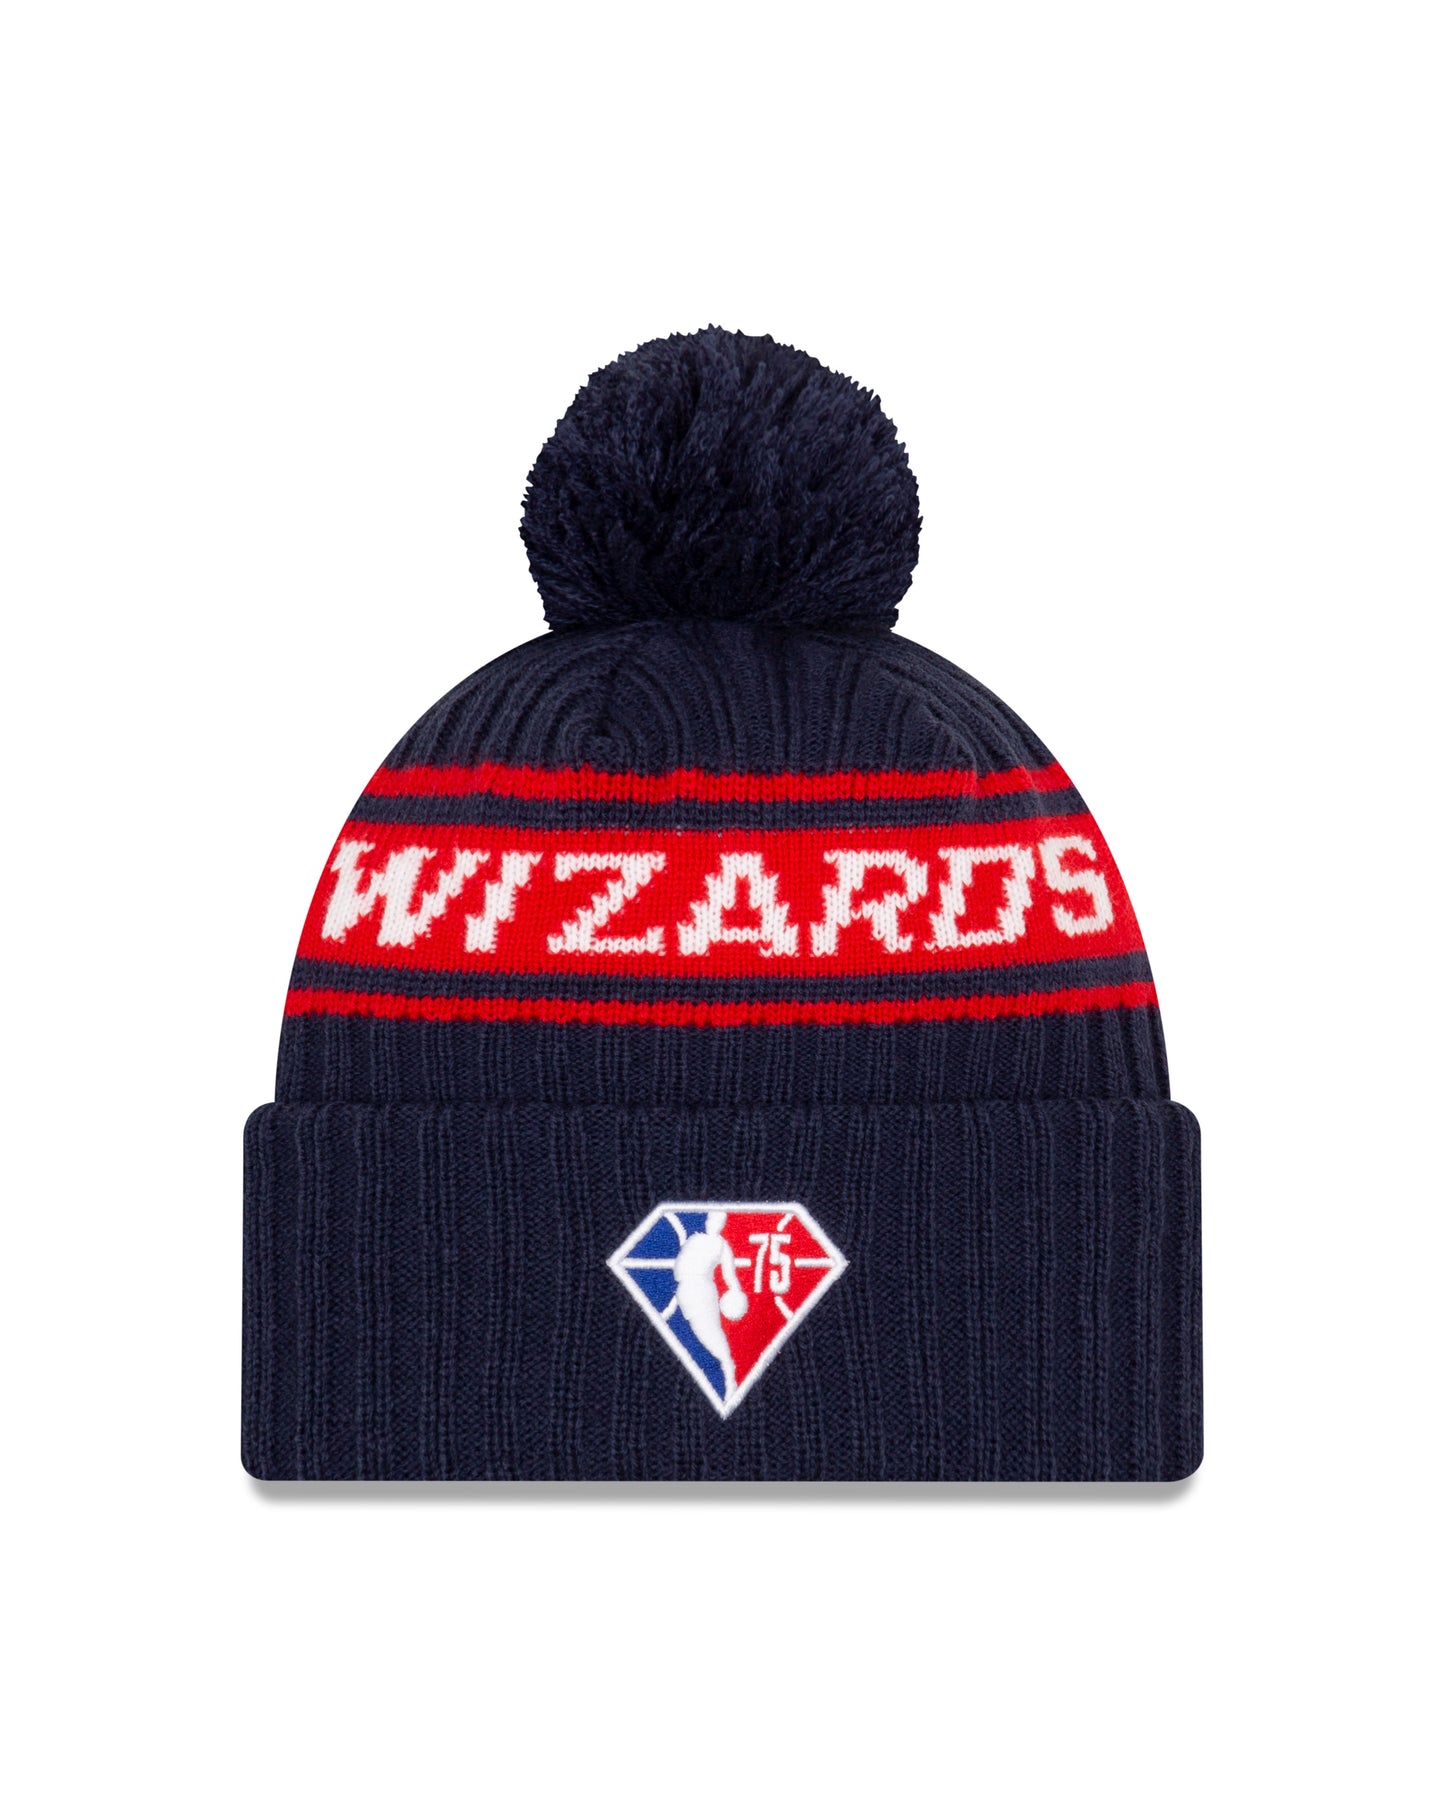 Washington Wizards New Era Draft Knit Hat